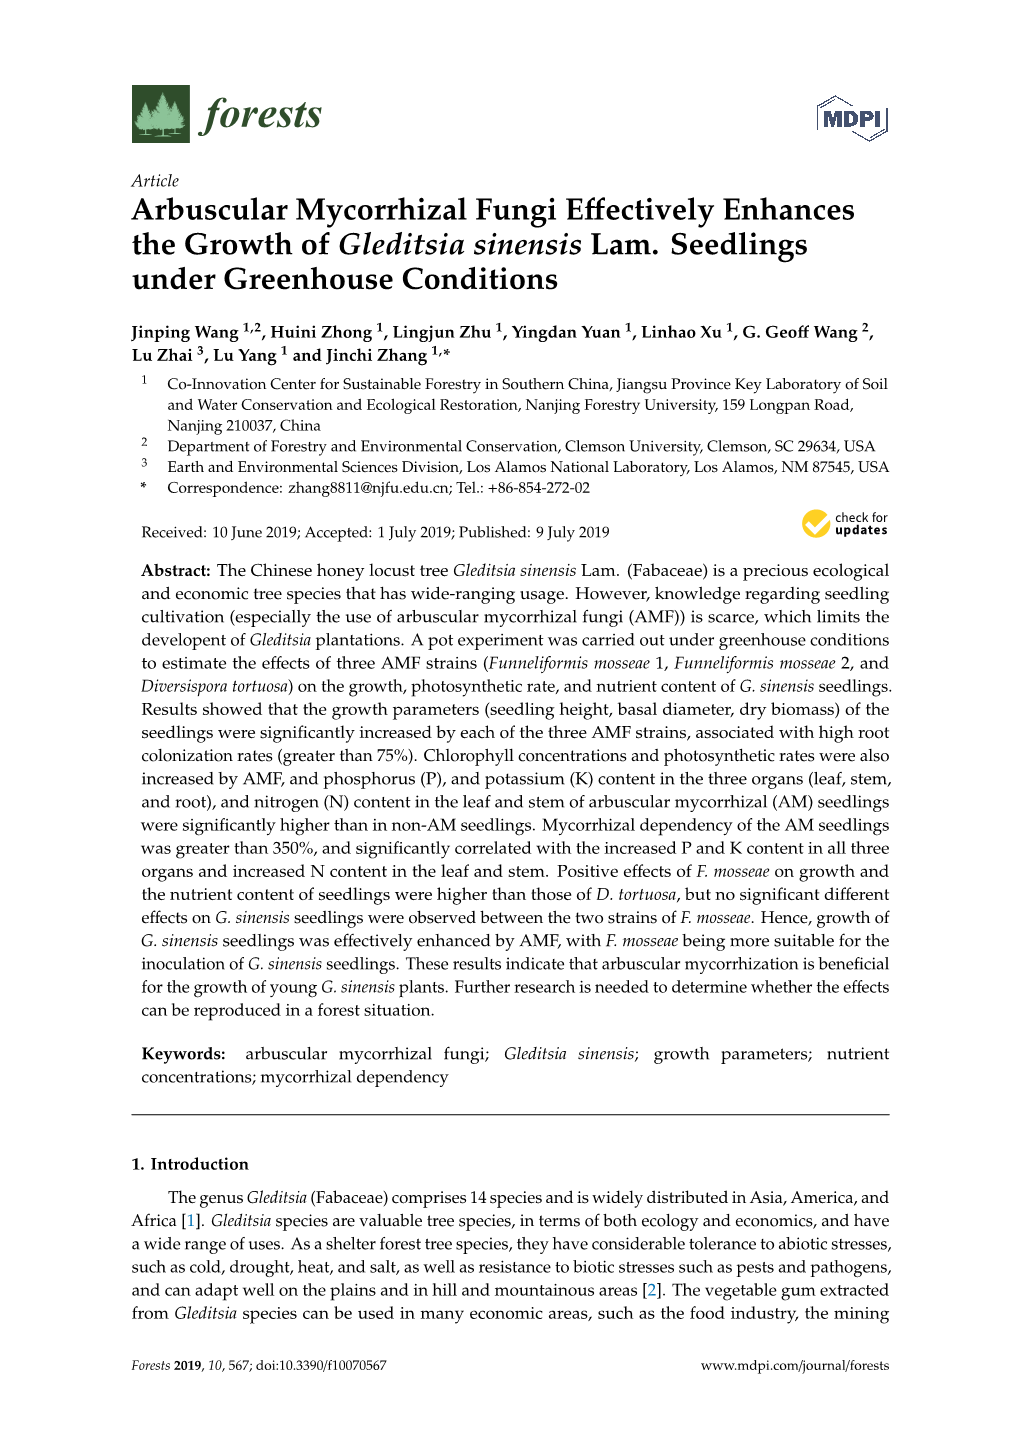 Arbuscular Mycorrhizal Fungi Effectively Enhances the Growth of Gleditsia Sinensis Lam. Seedlings Under Greenhouse Conditions